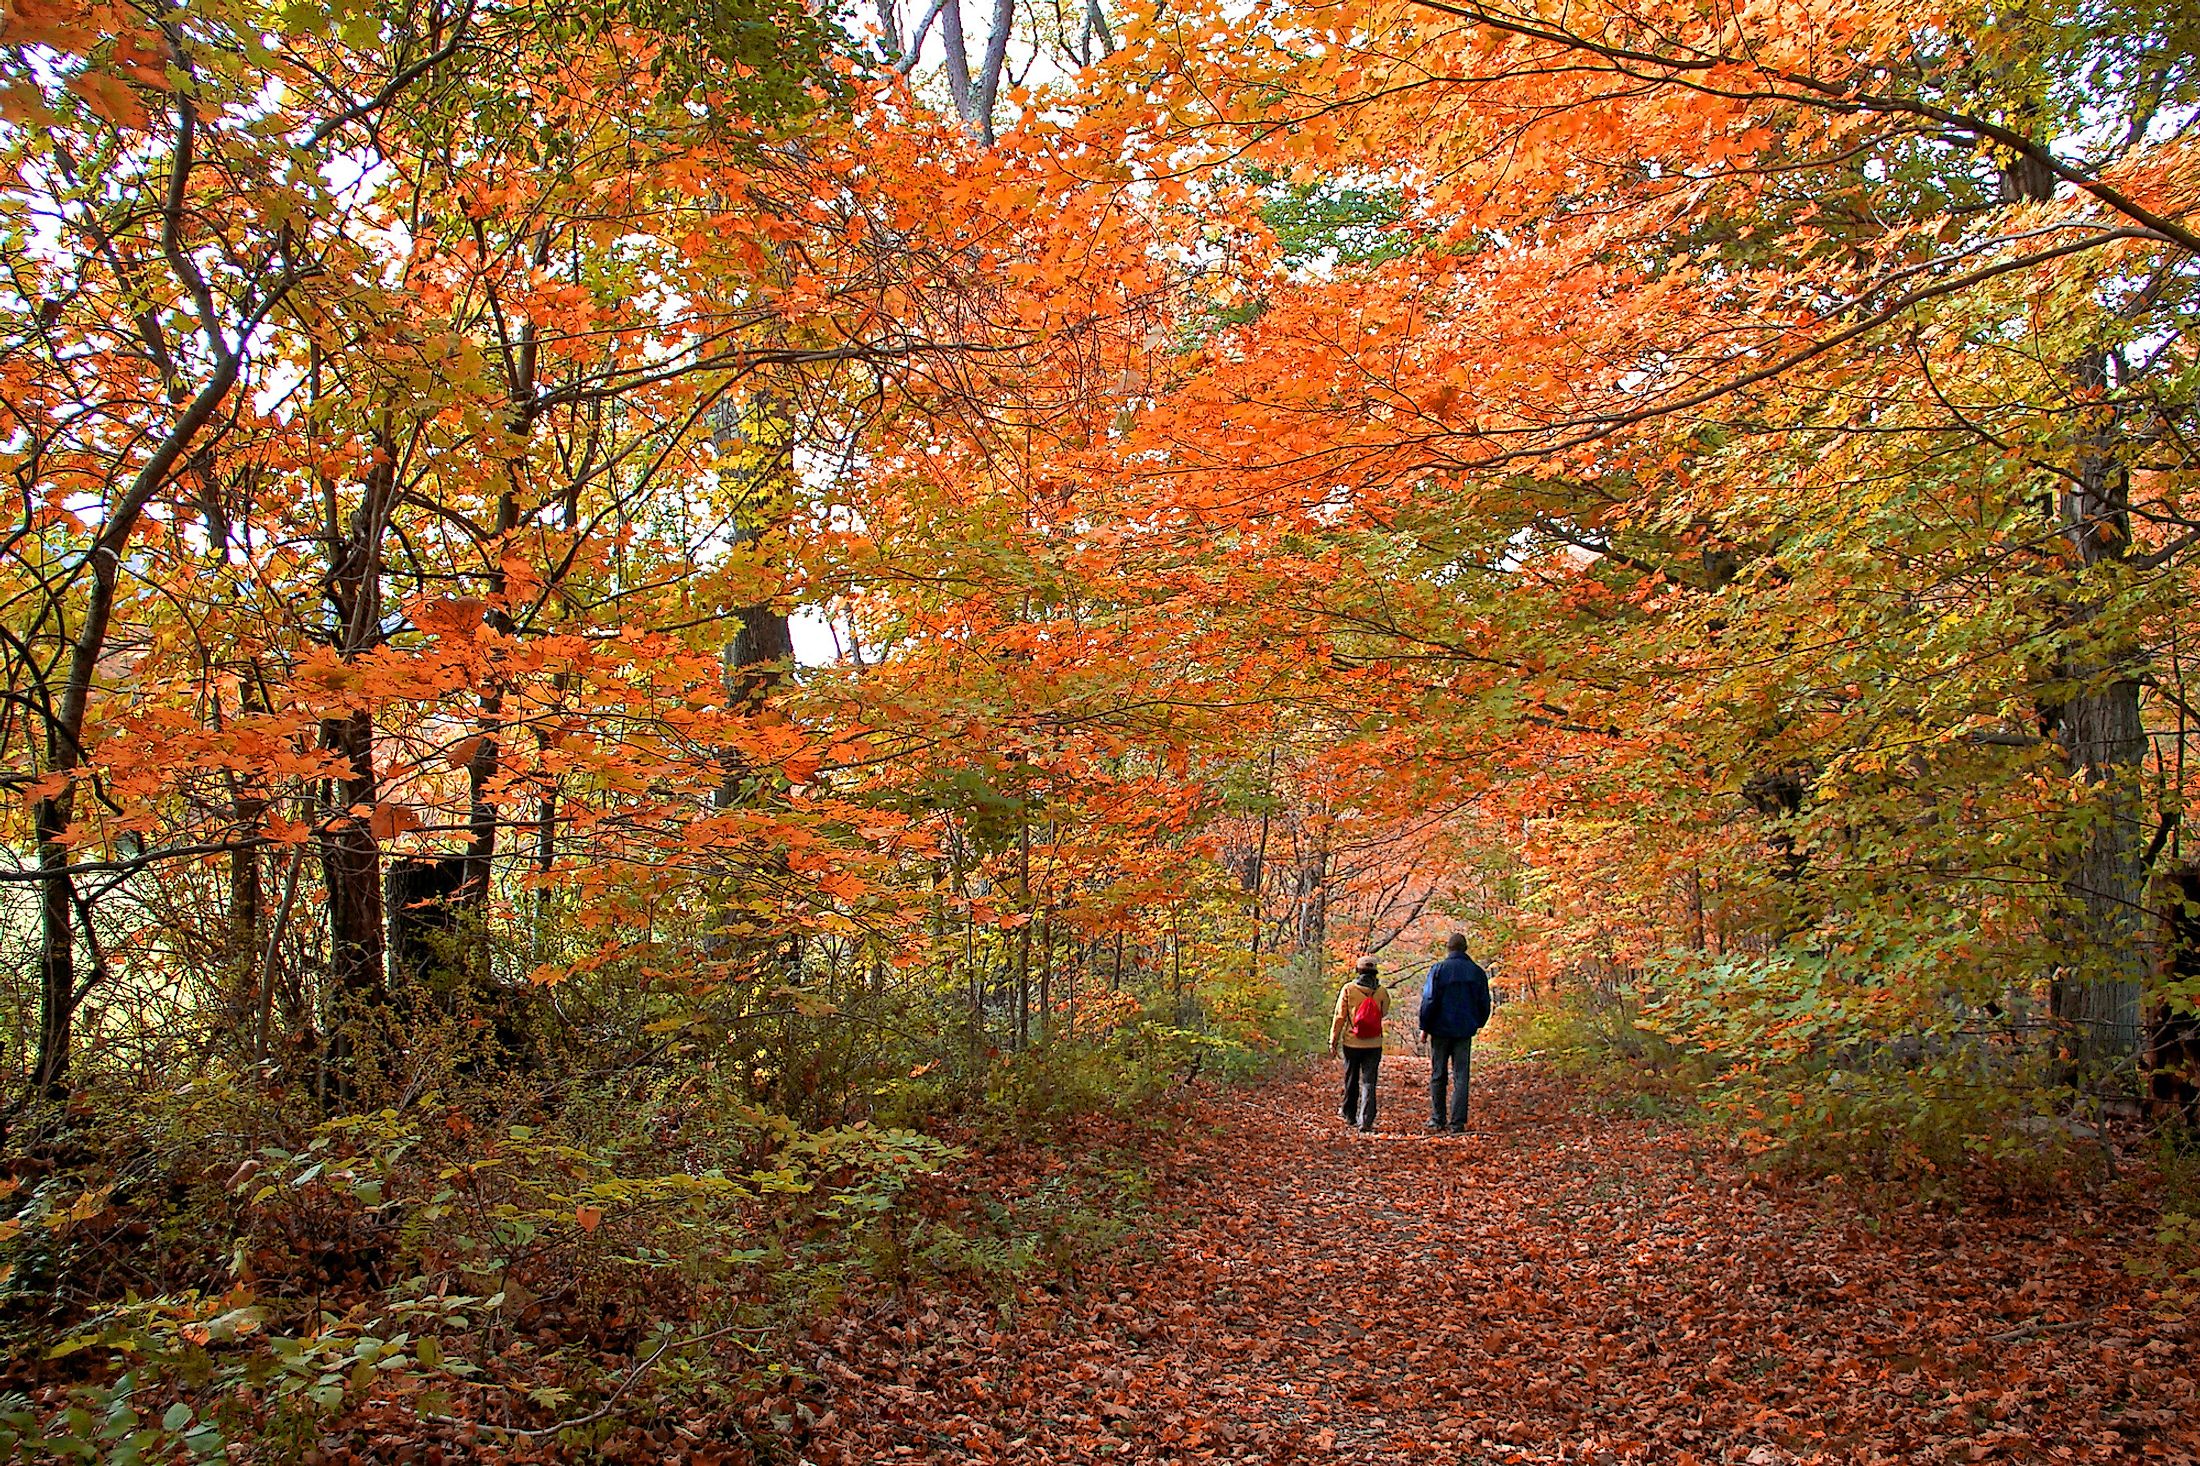 A walk through the fall landscape in the Berkshires, Massachusetts.